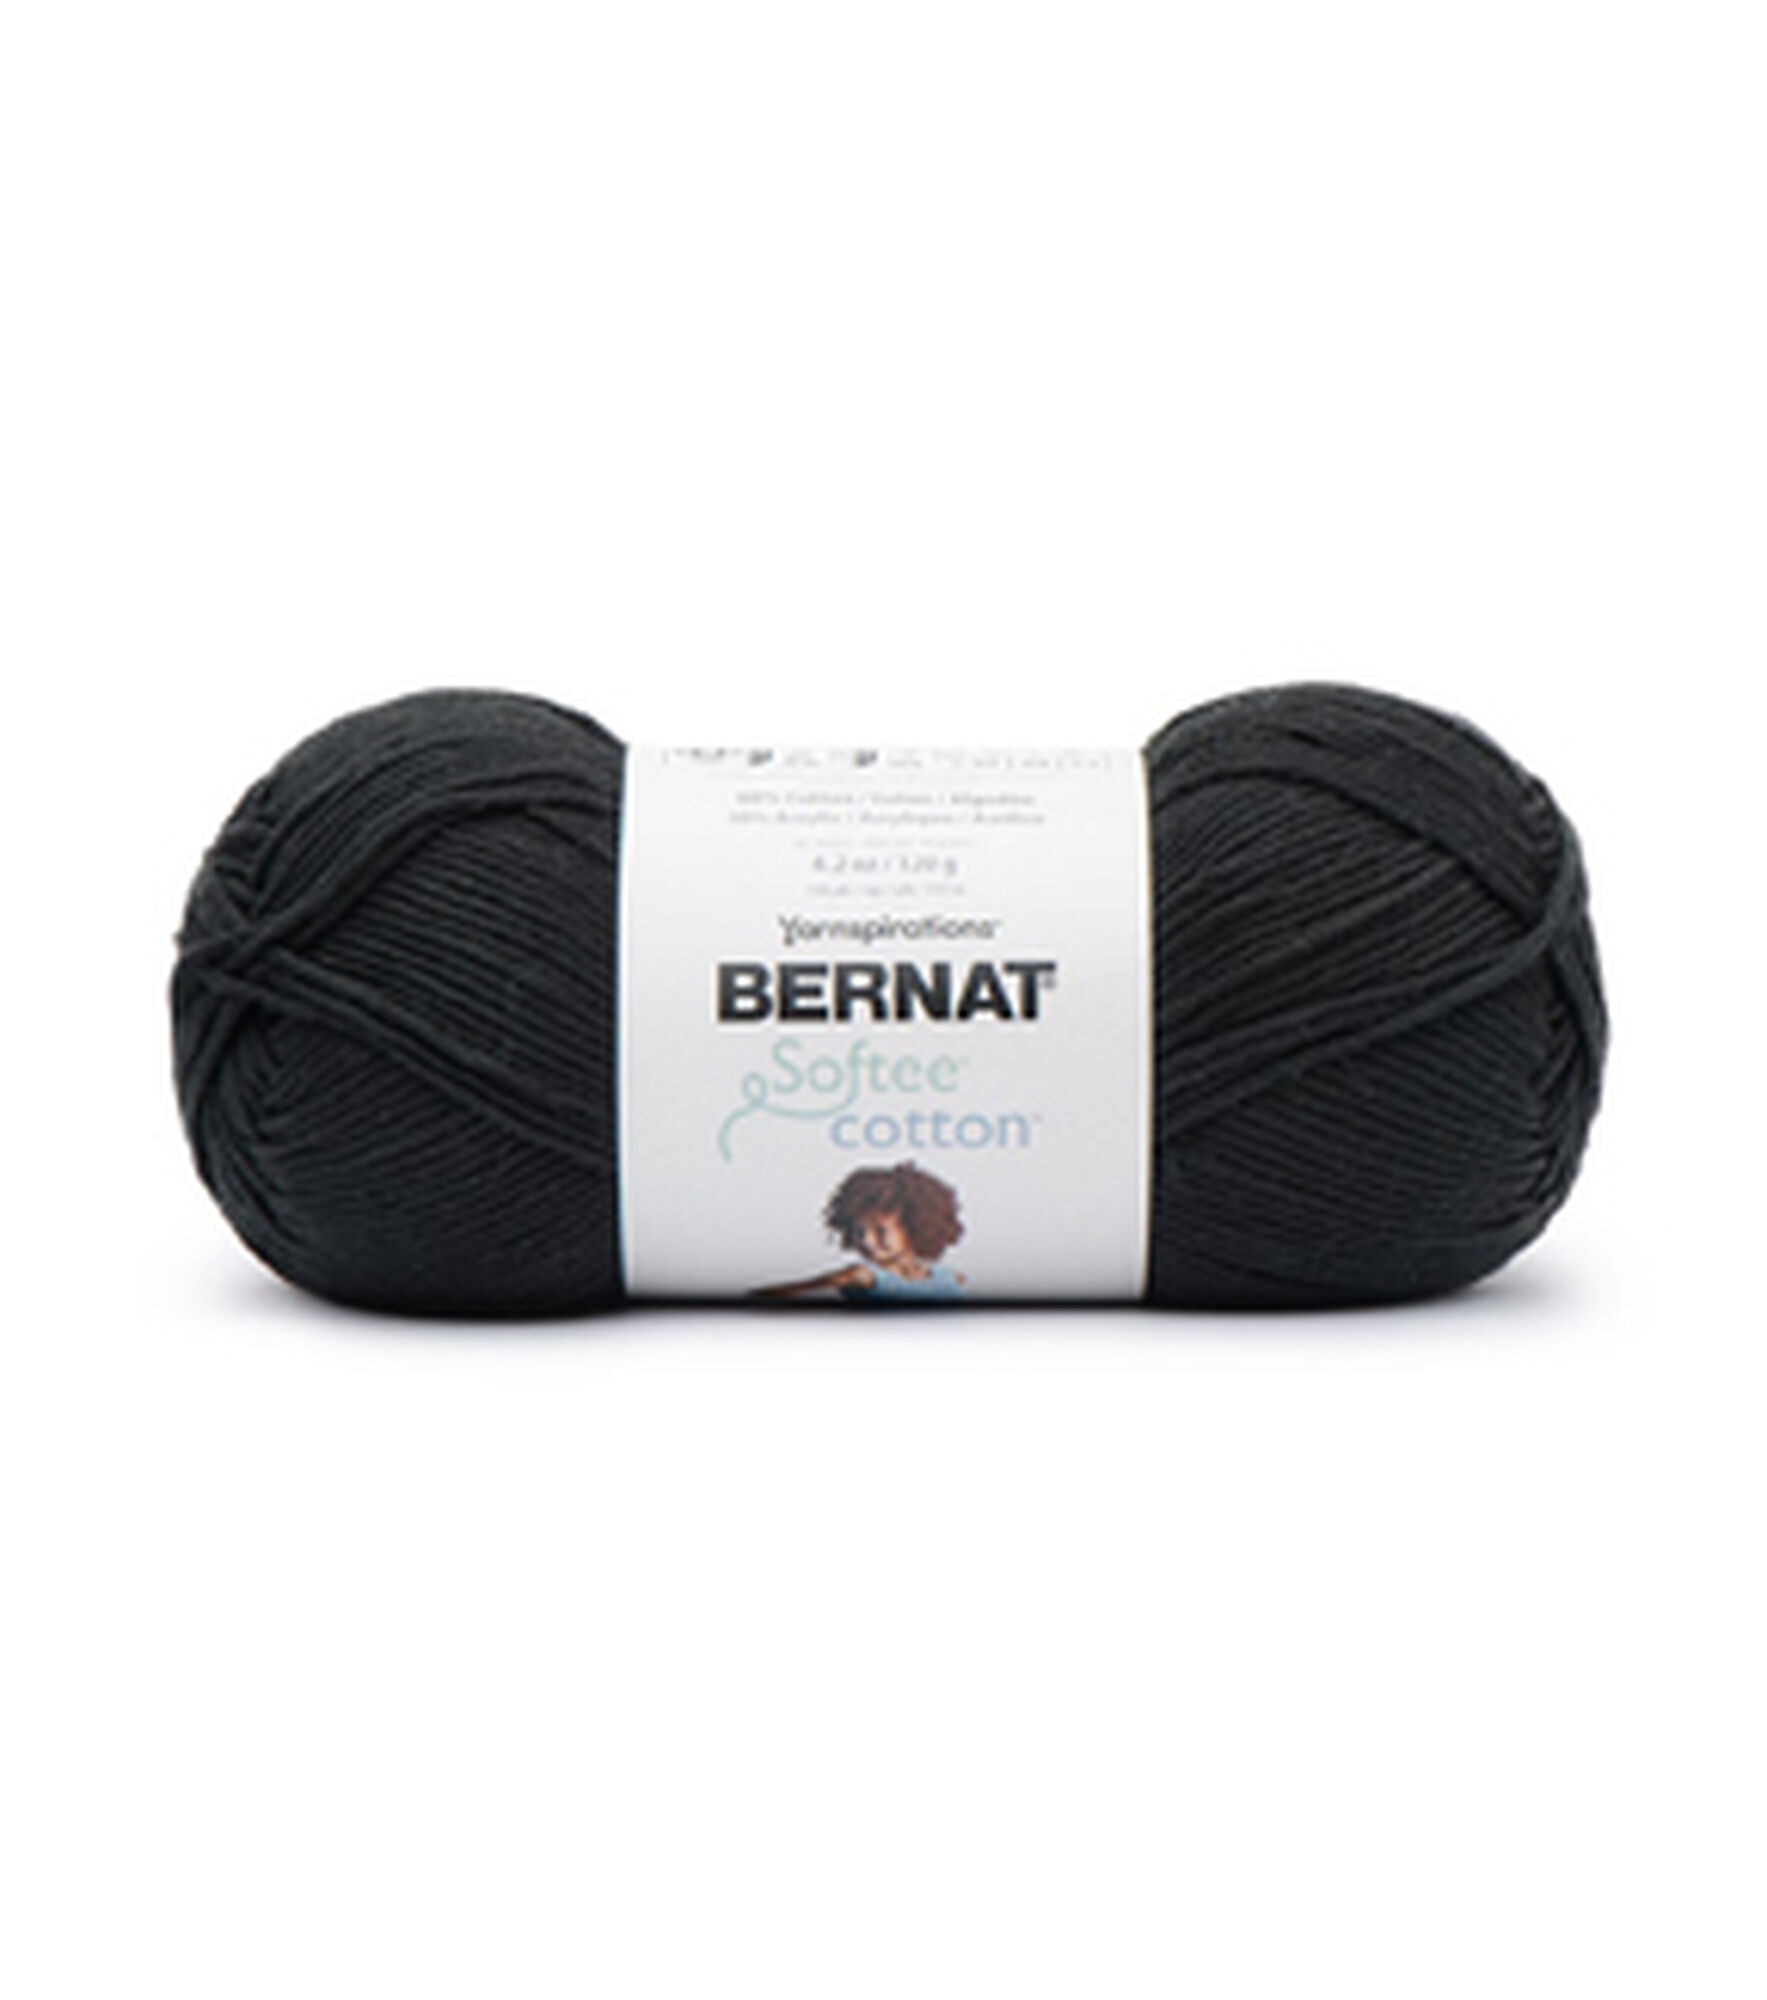 Bernat Softee 254yds Light Weight Cotton Yarn, Black, hi-res